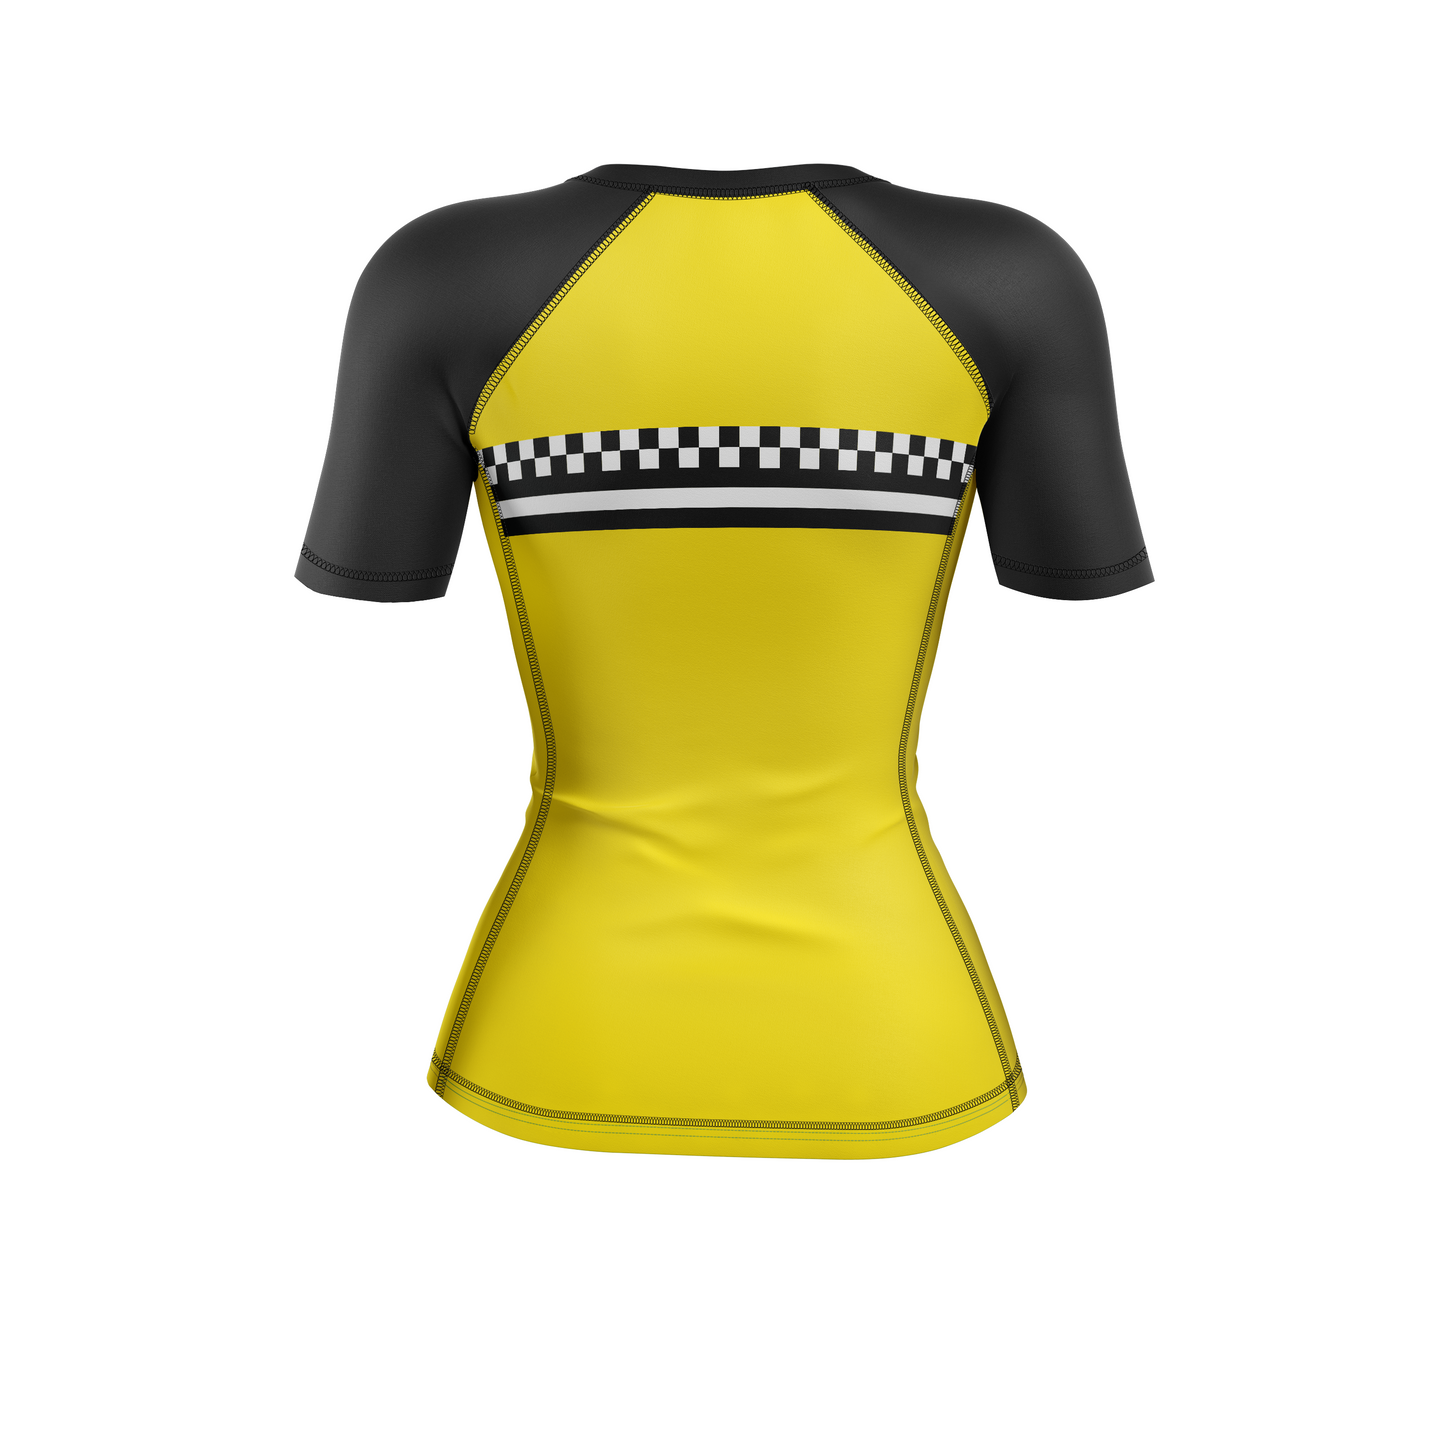 CCFC women's rash guard Pile Drivers, yellow and black